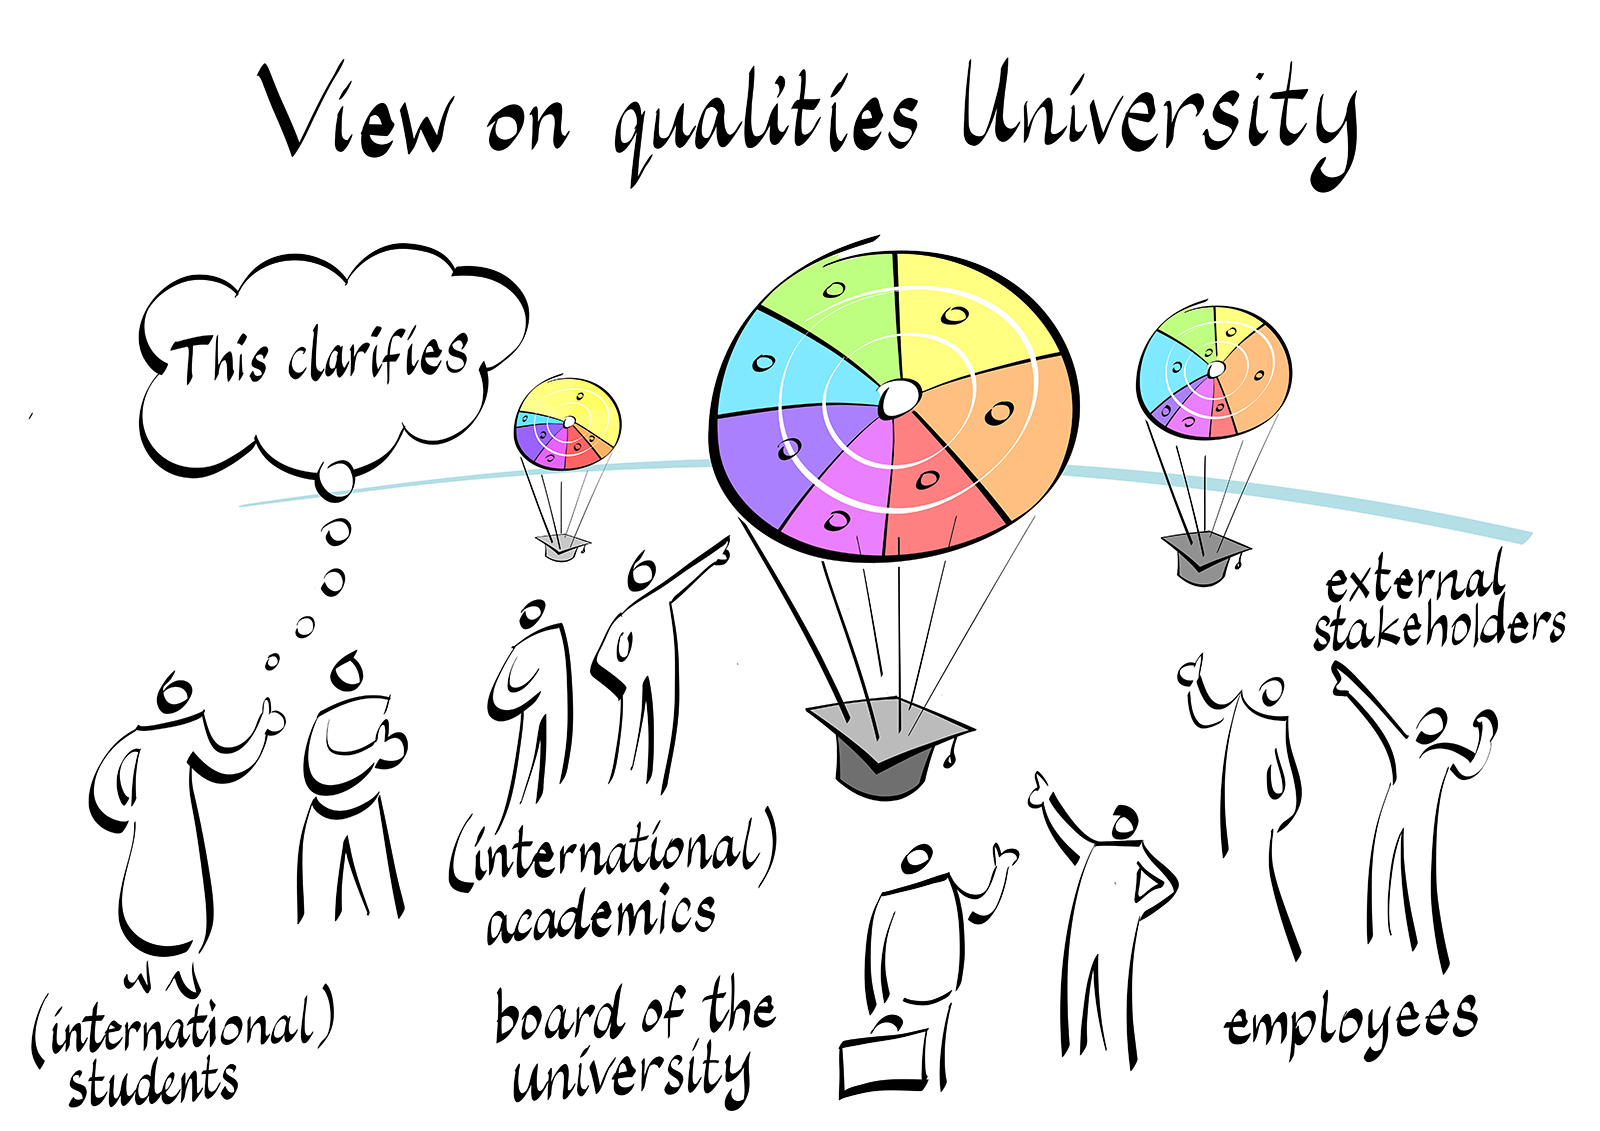 View on qualities University